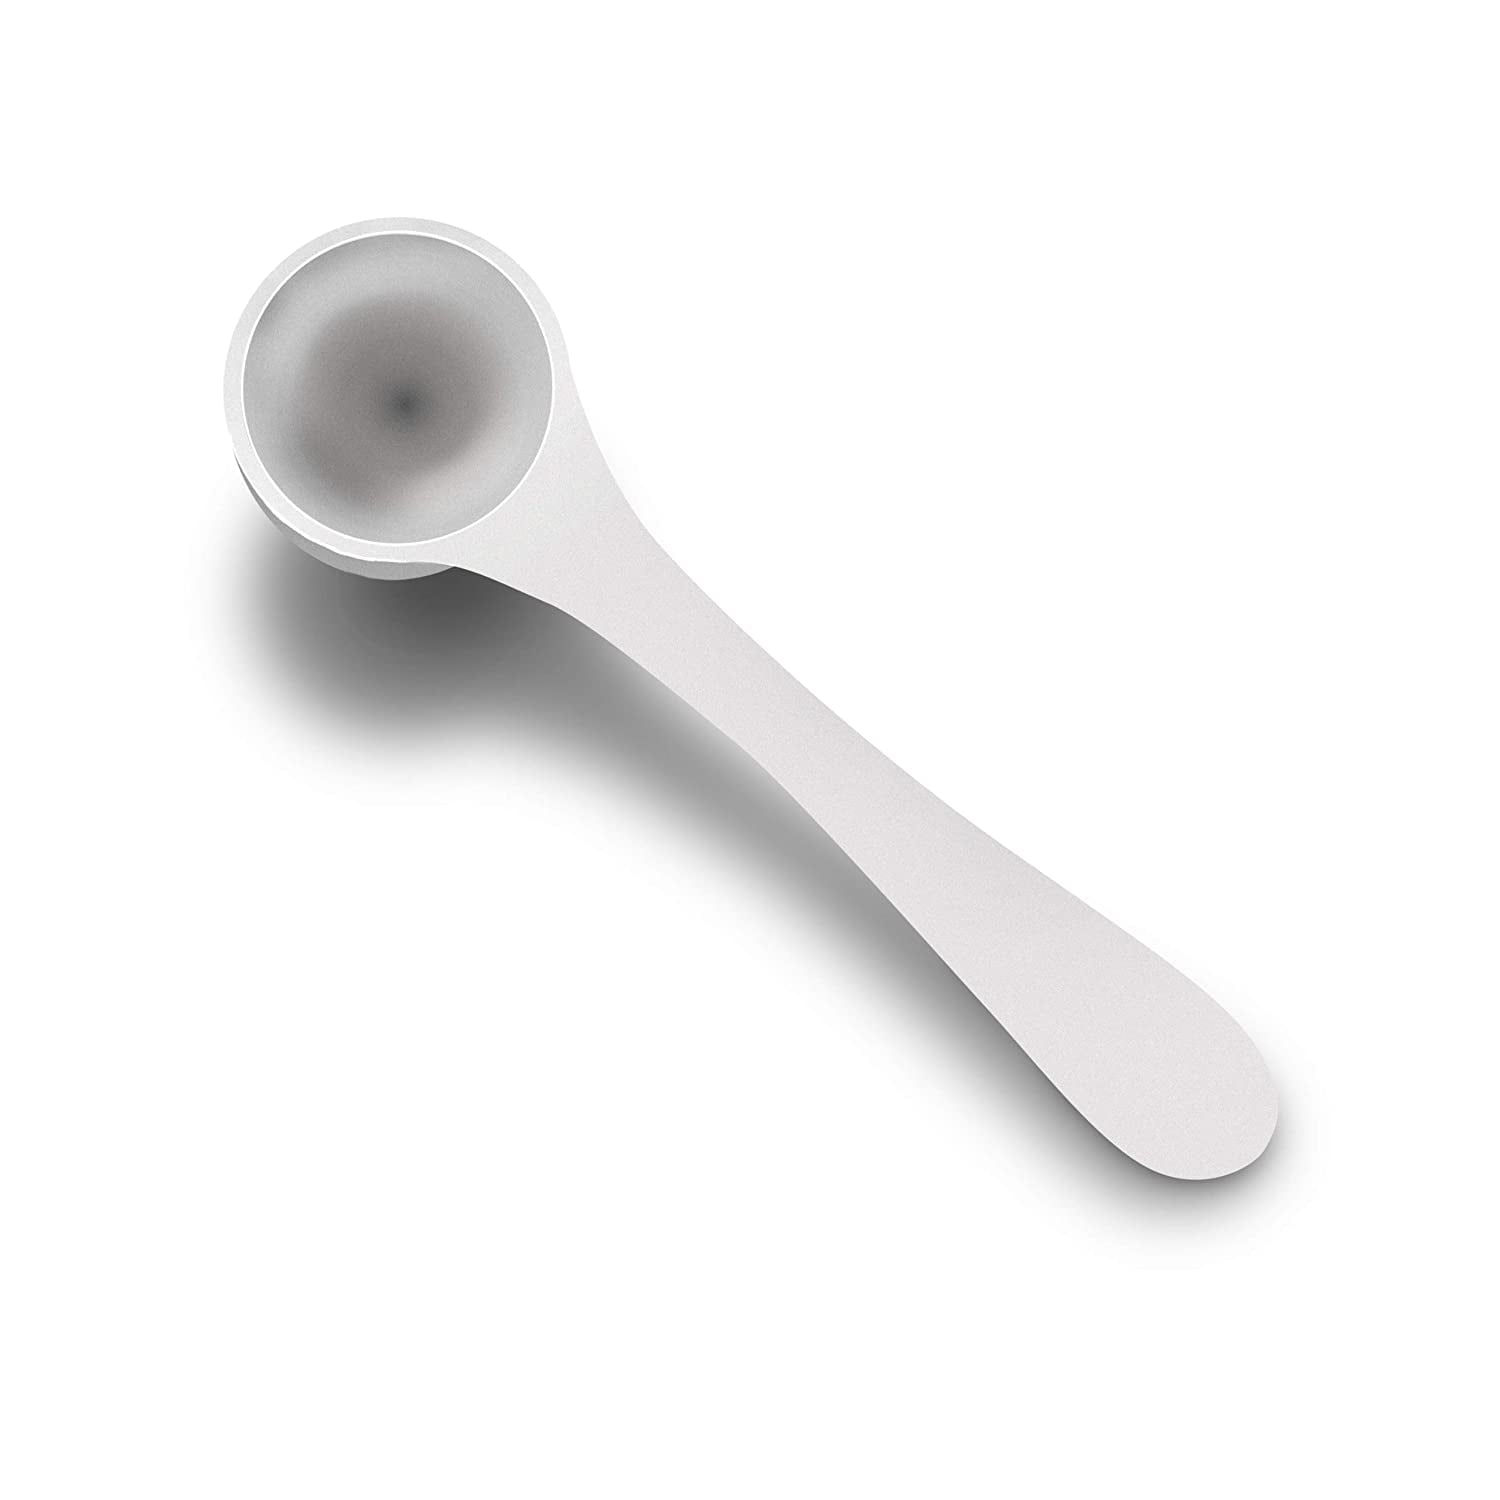 Plastic Measuring Scoop, 2 Teaspoon (Bowl 10 CC | 10 ml) Long Handle Spoons for Powders & Granules, Coffee, Pet Food, Grains, Protein, Spices